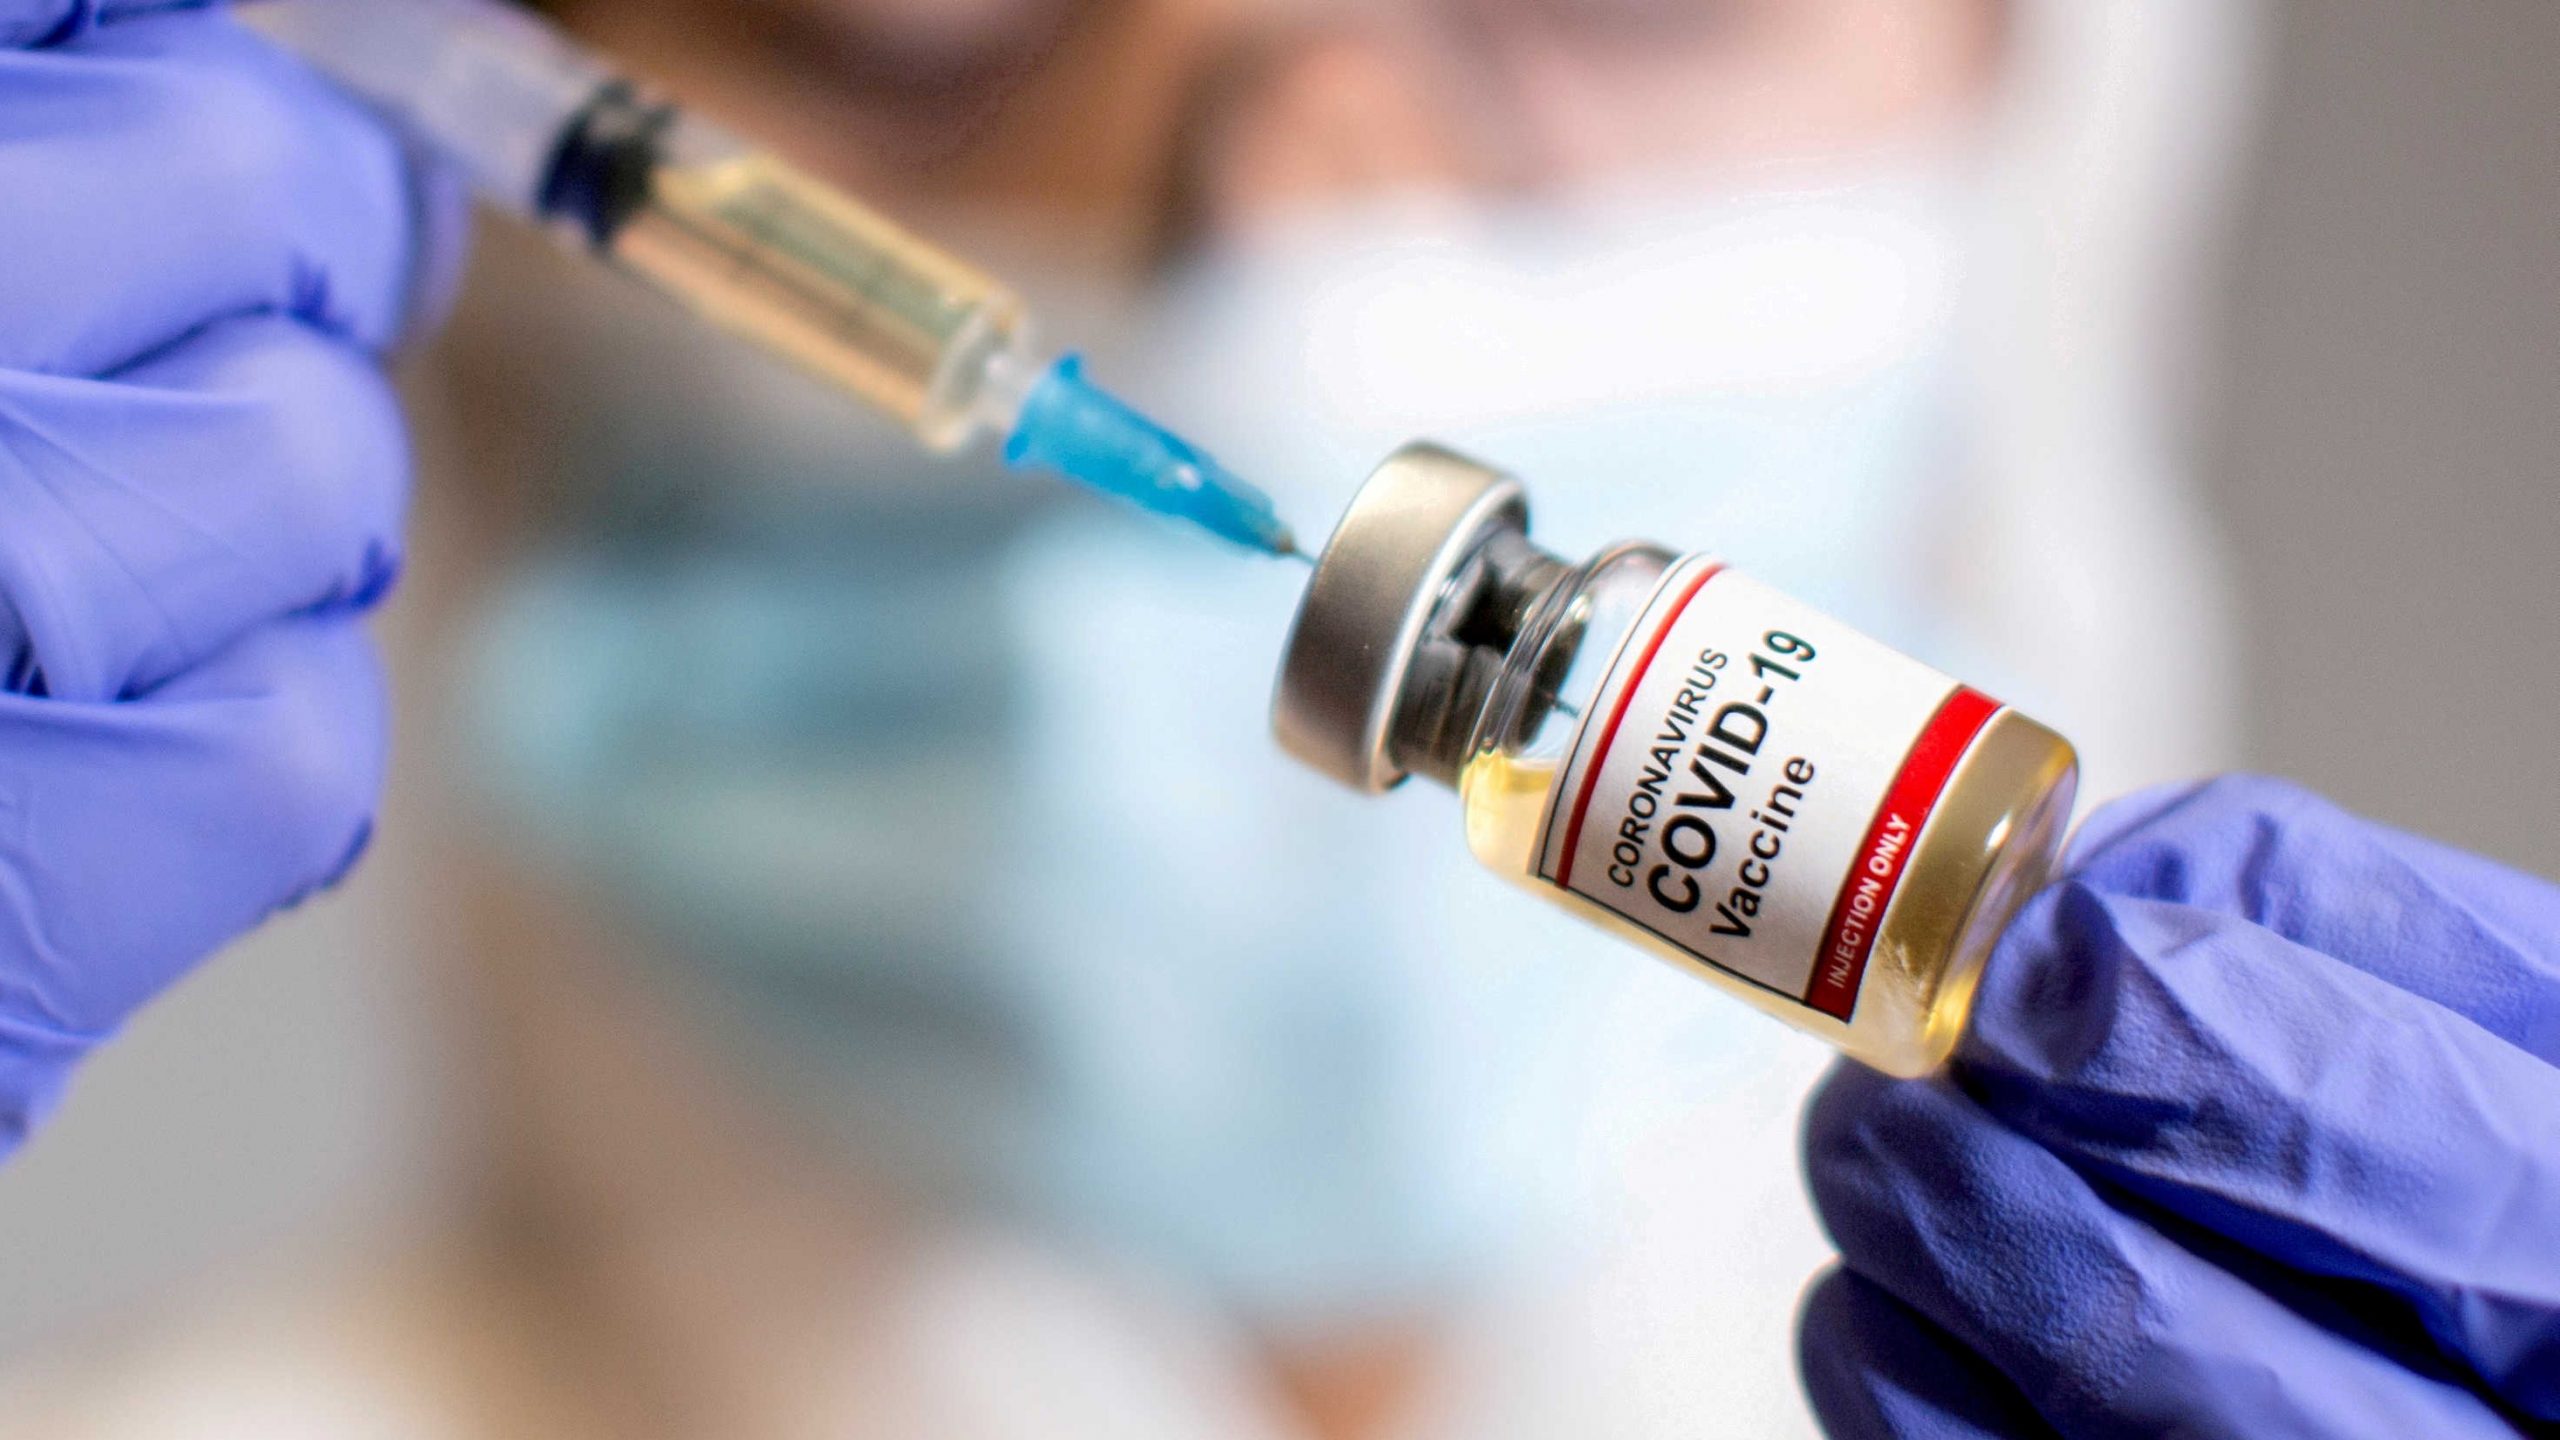 جۆرێكی ڤاكسینی كۆرۆنا لە جیهاندا دەكێشرێتەوە